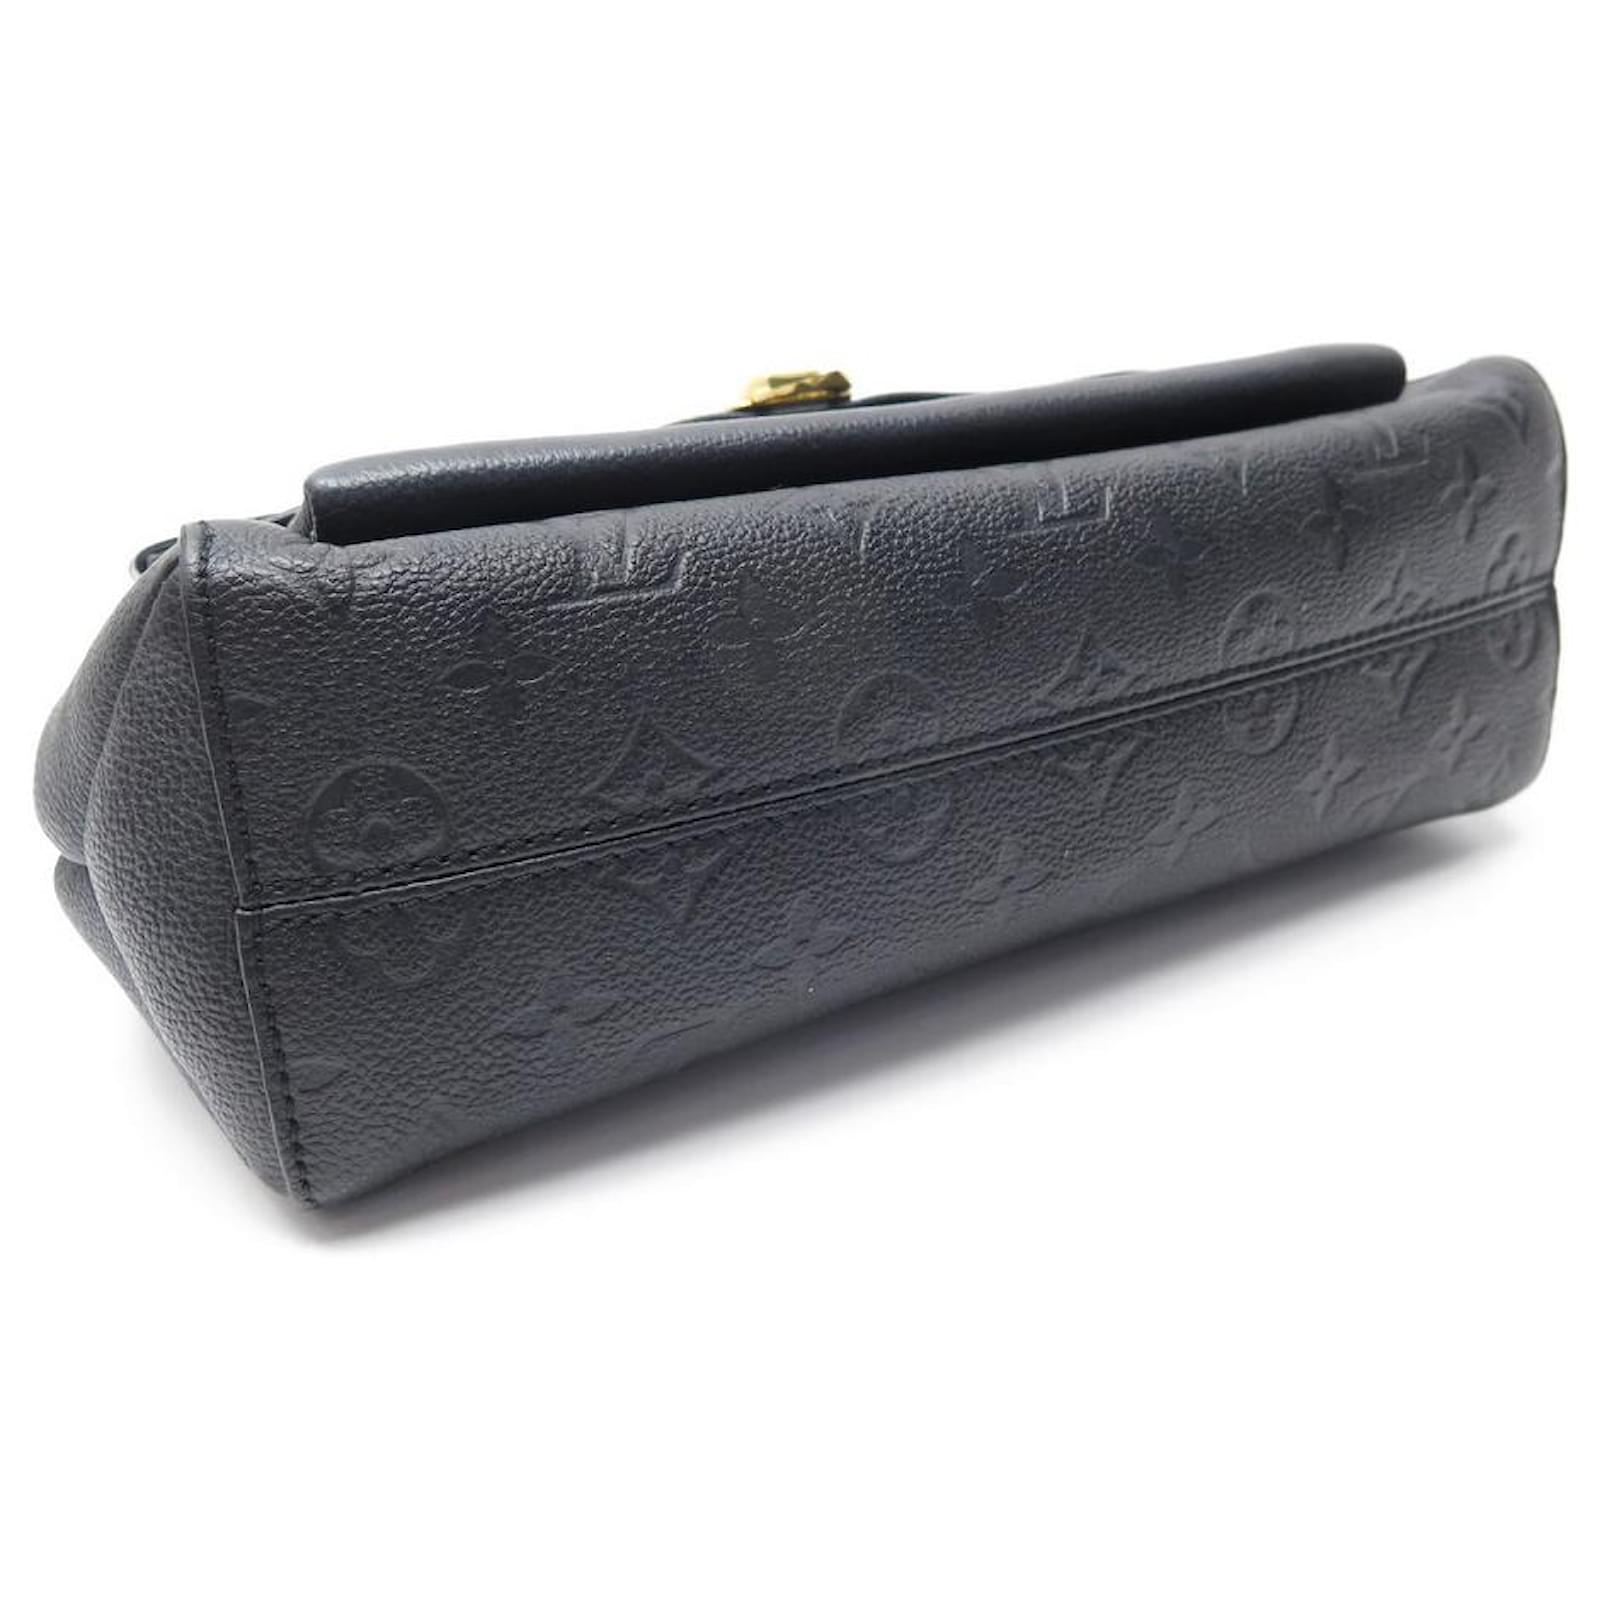 Vavin handbag Louis Vuitton Black in Metal - 31086264